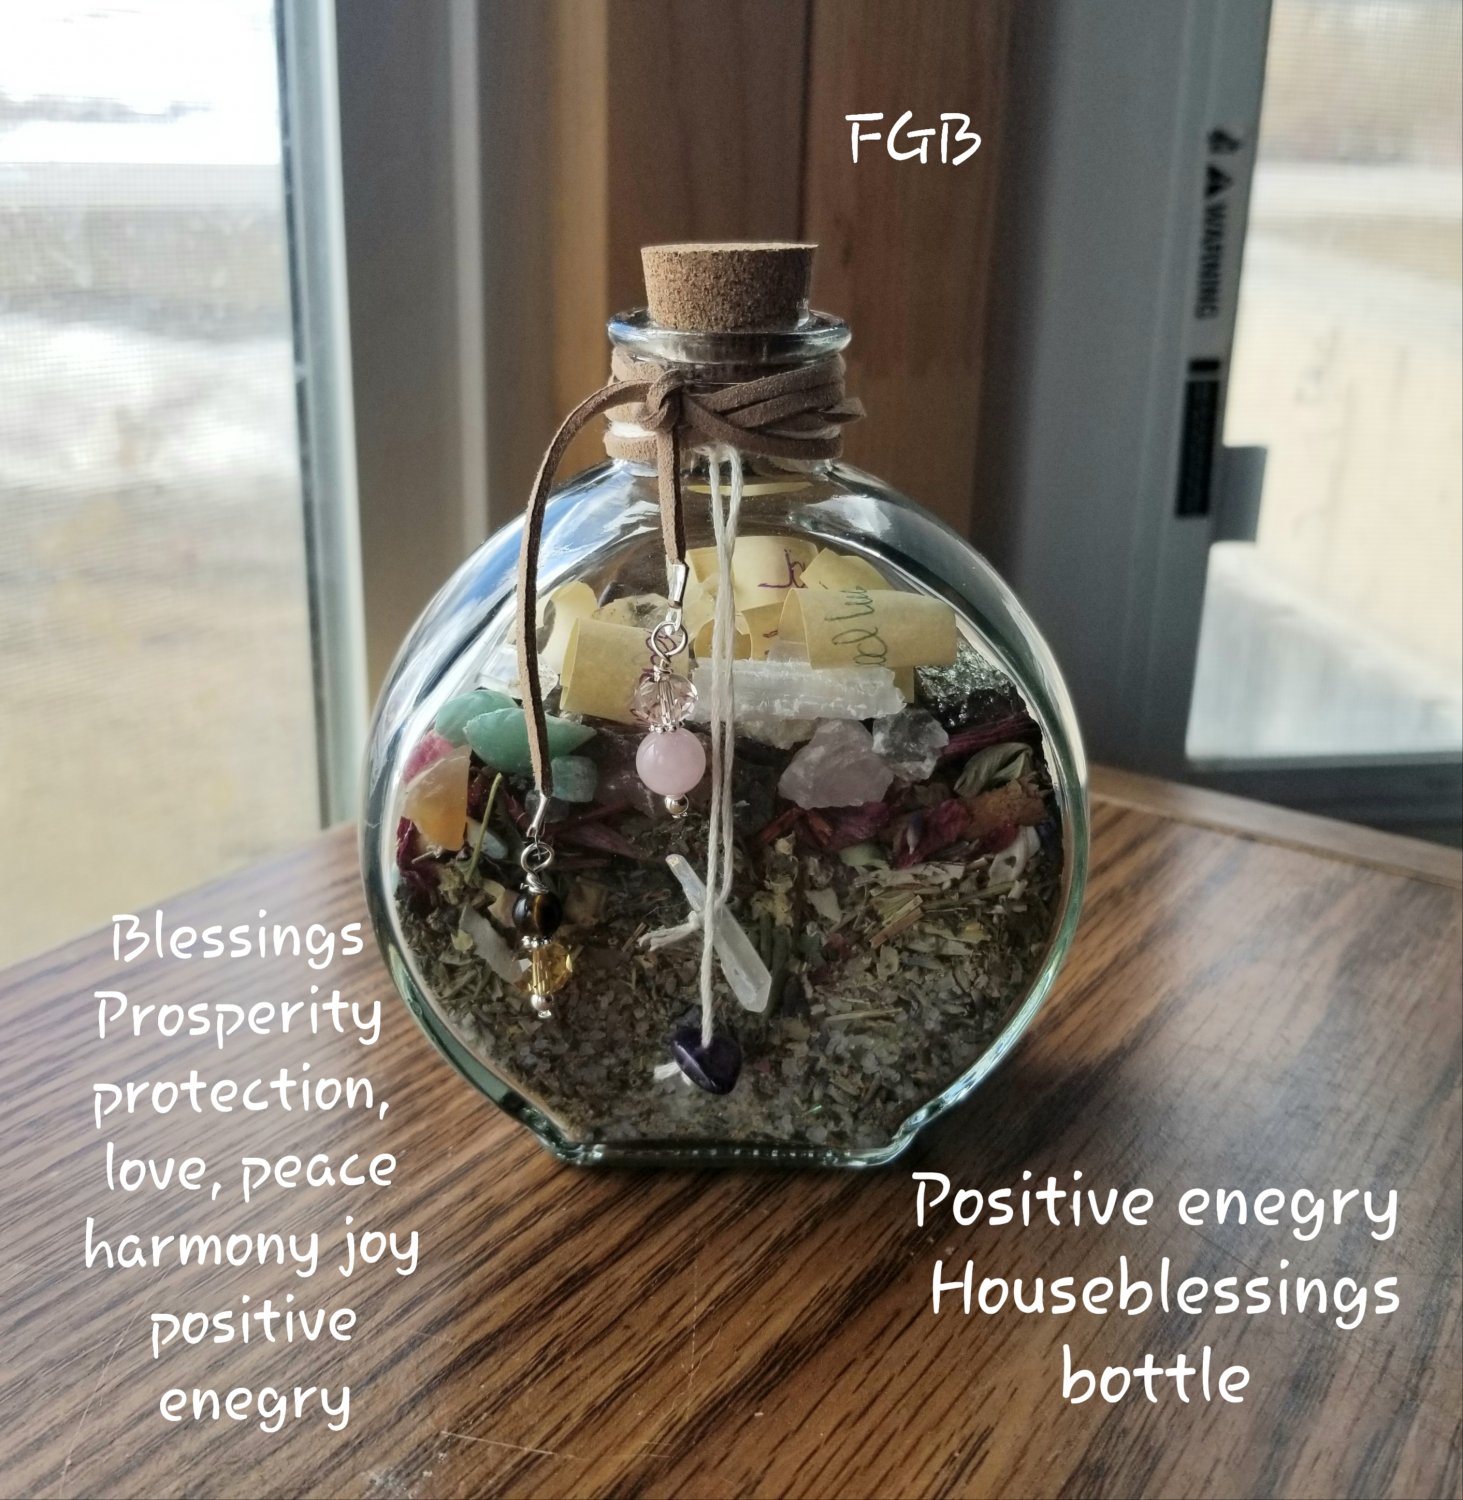 Positive enegry houseblessings bottle #2